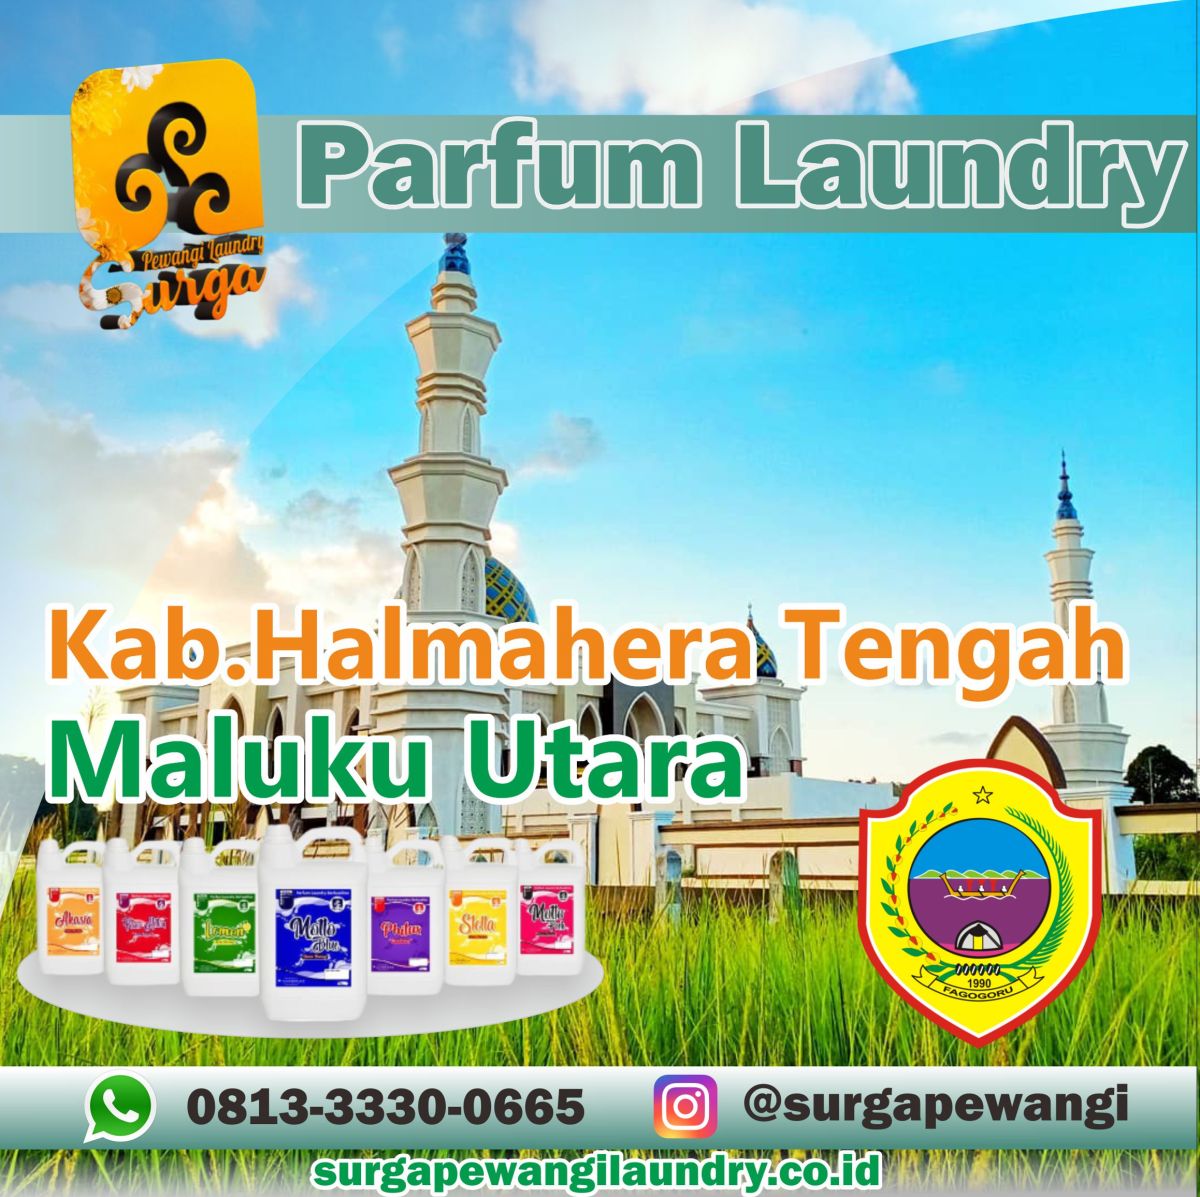 Parfum Laundry Kabupaten Halmahera Tengah, Maluku Utara